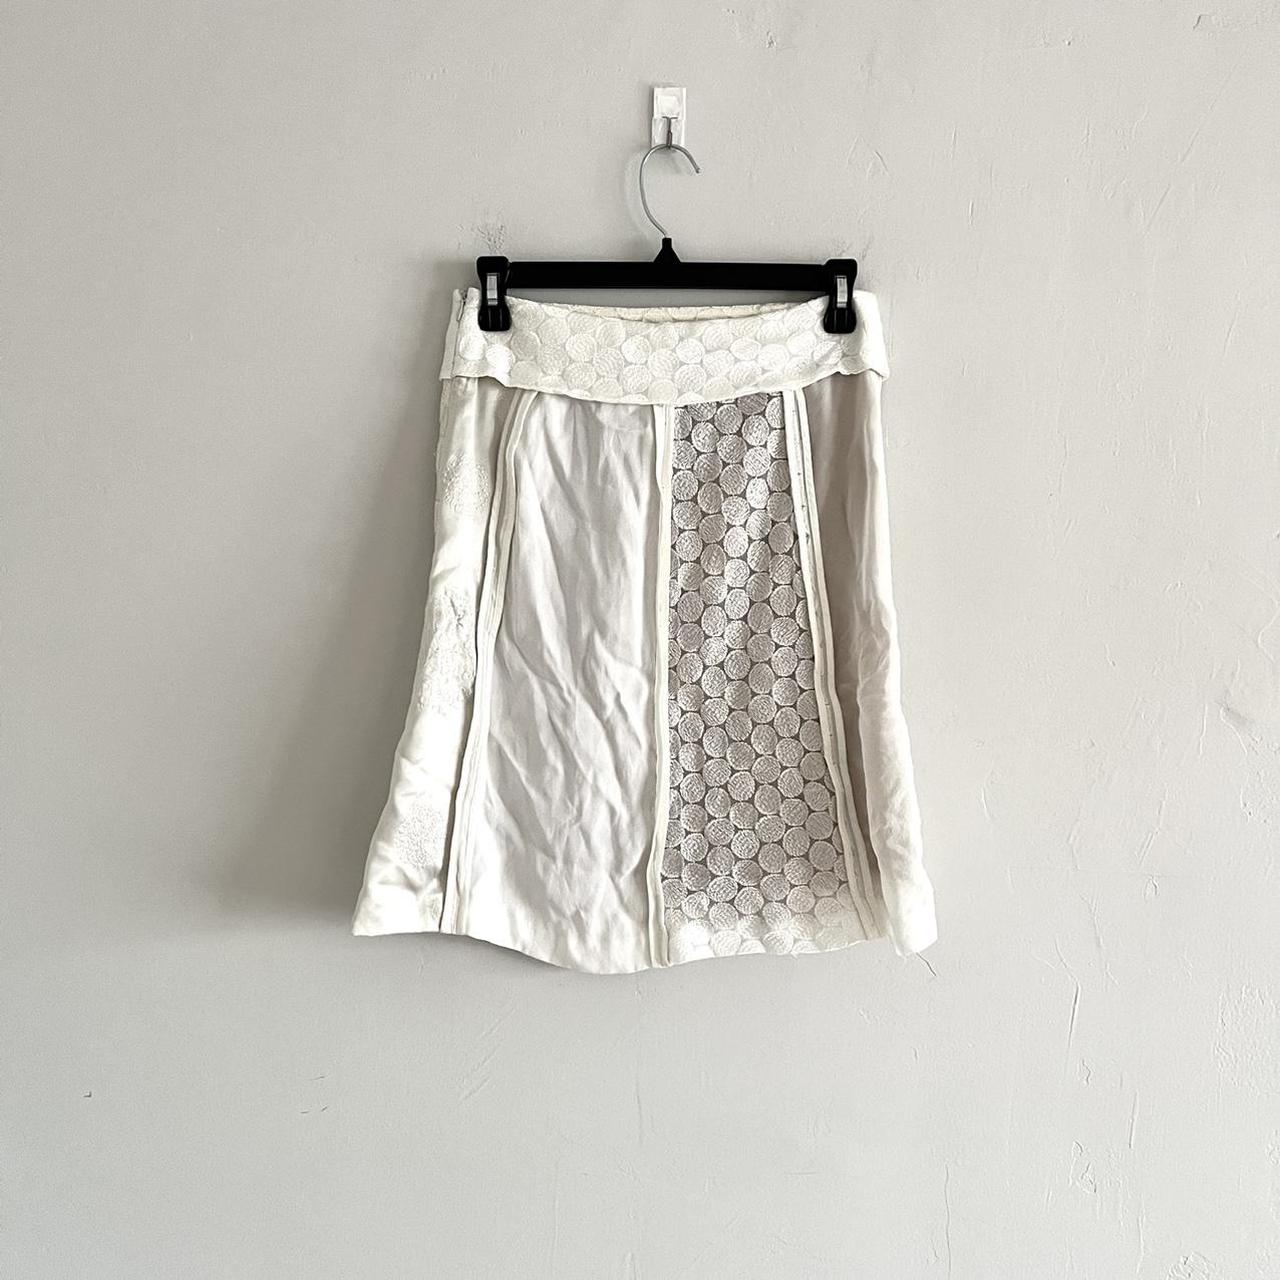 Ann Demeulemeester Women's Skirt (2)